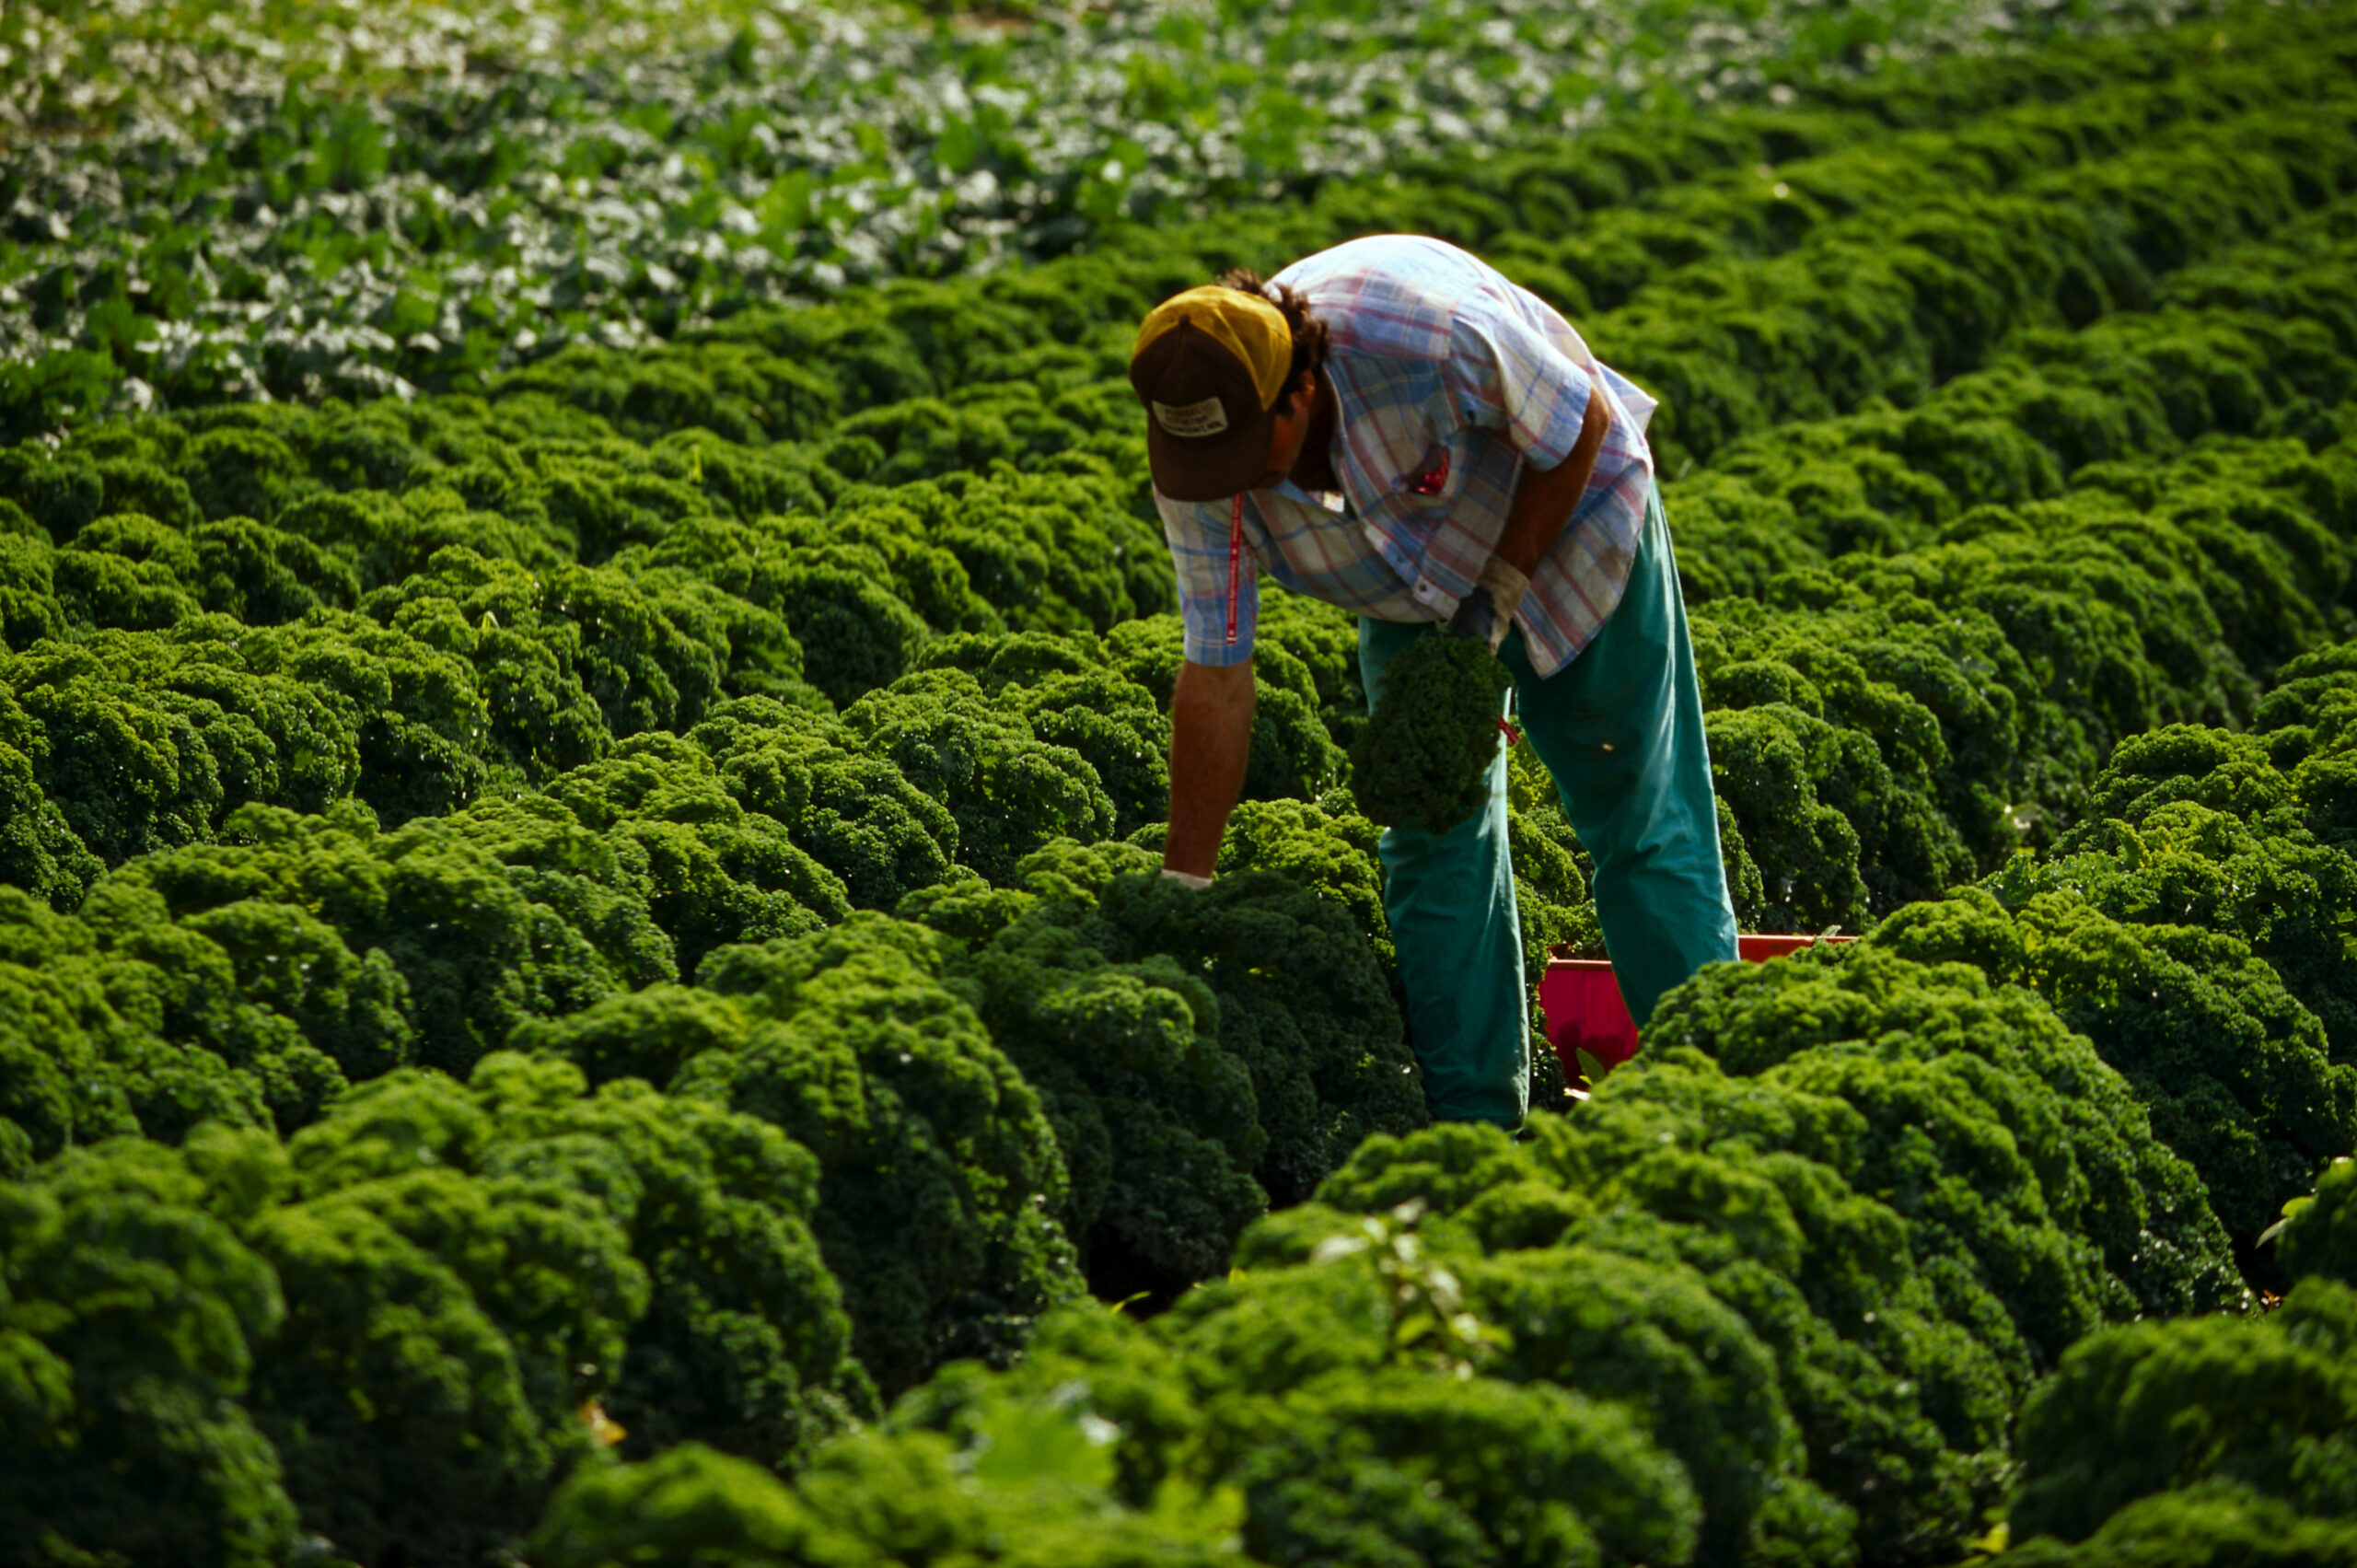 Martin Diffley harvesting green kale.